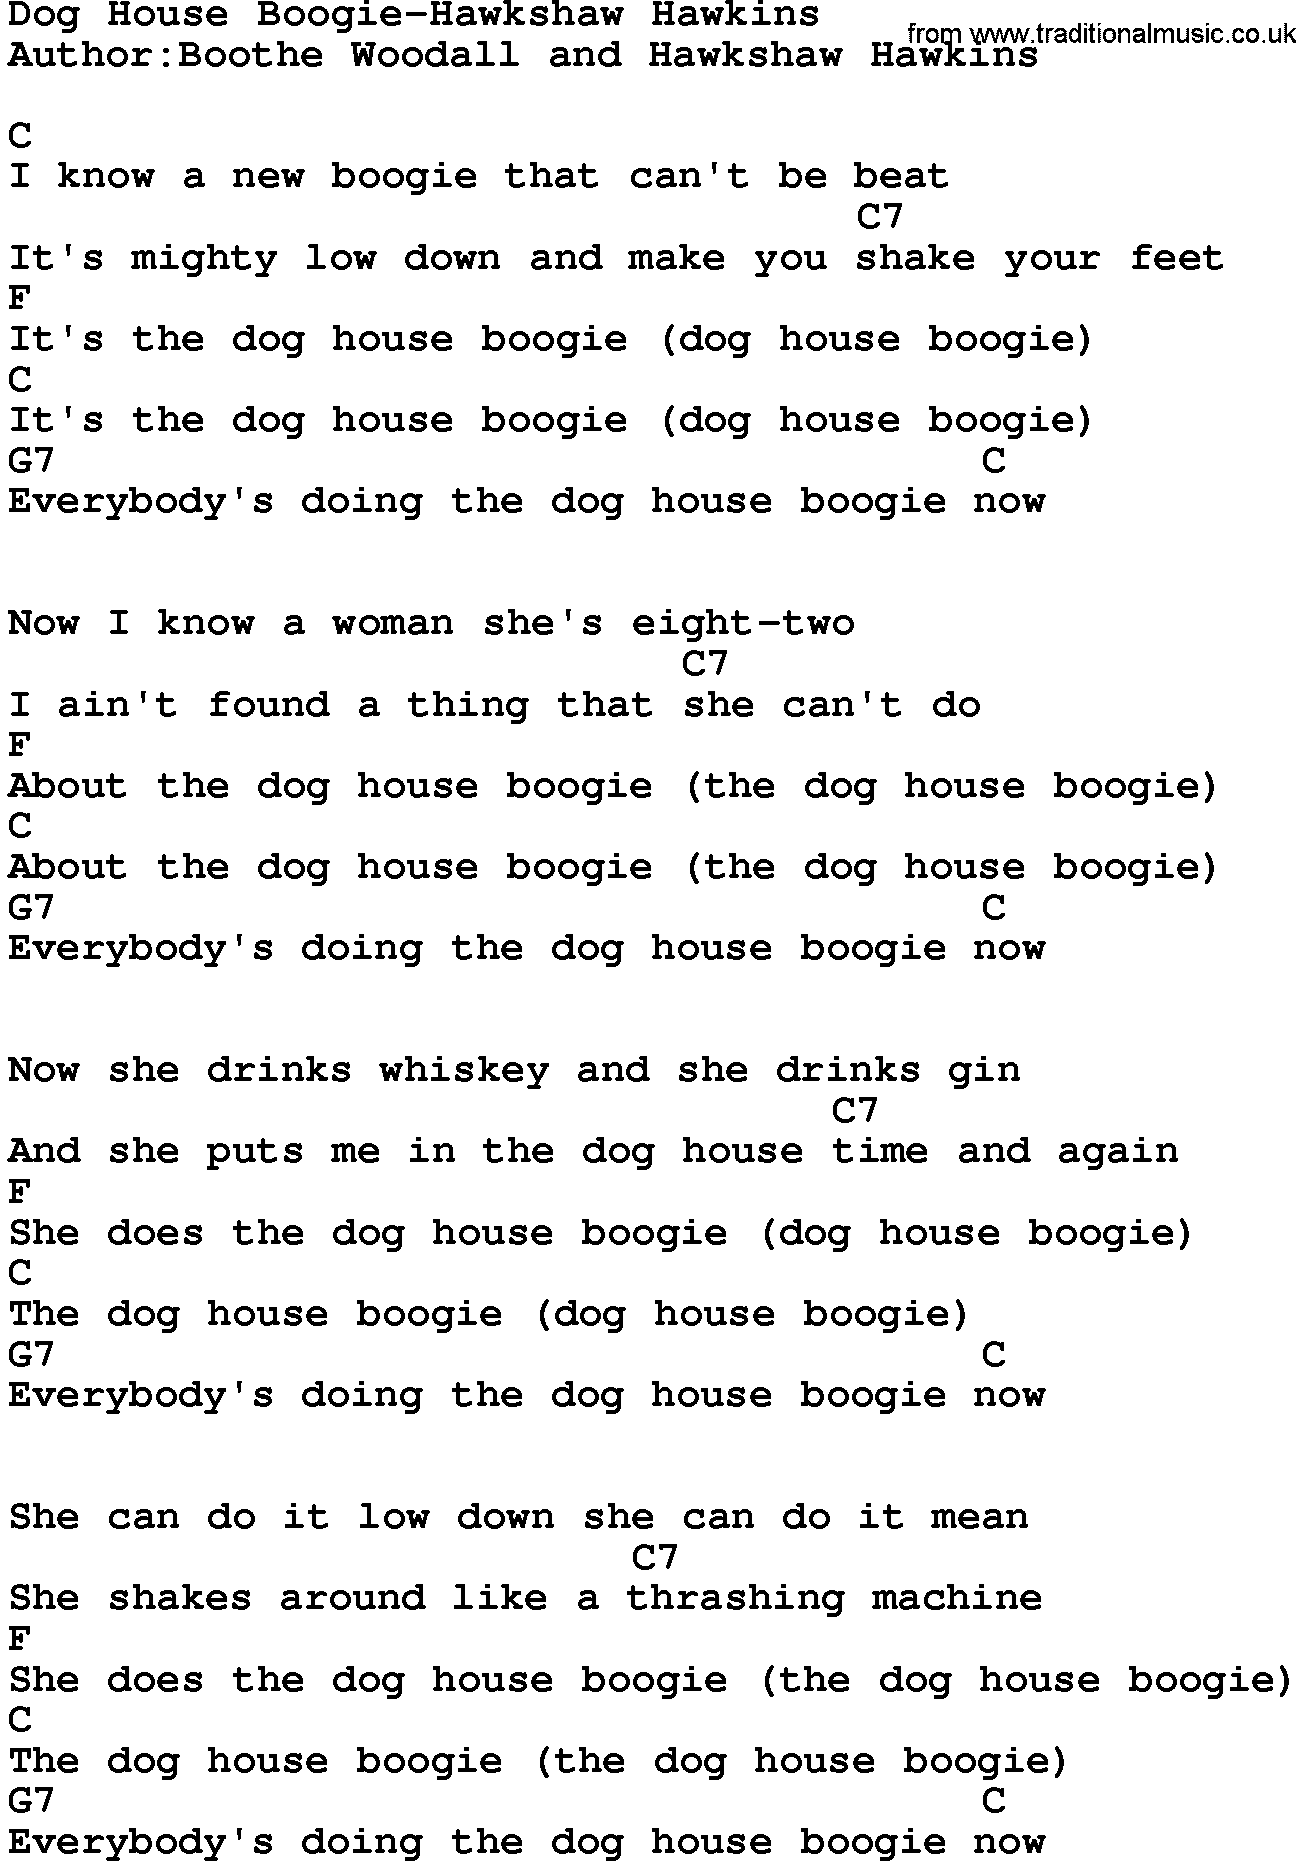 Country music song: Dog House Boogie-Hawkshaw Hawkins lyrics and chords